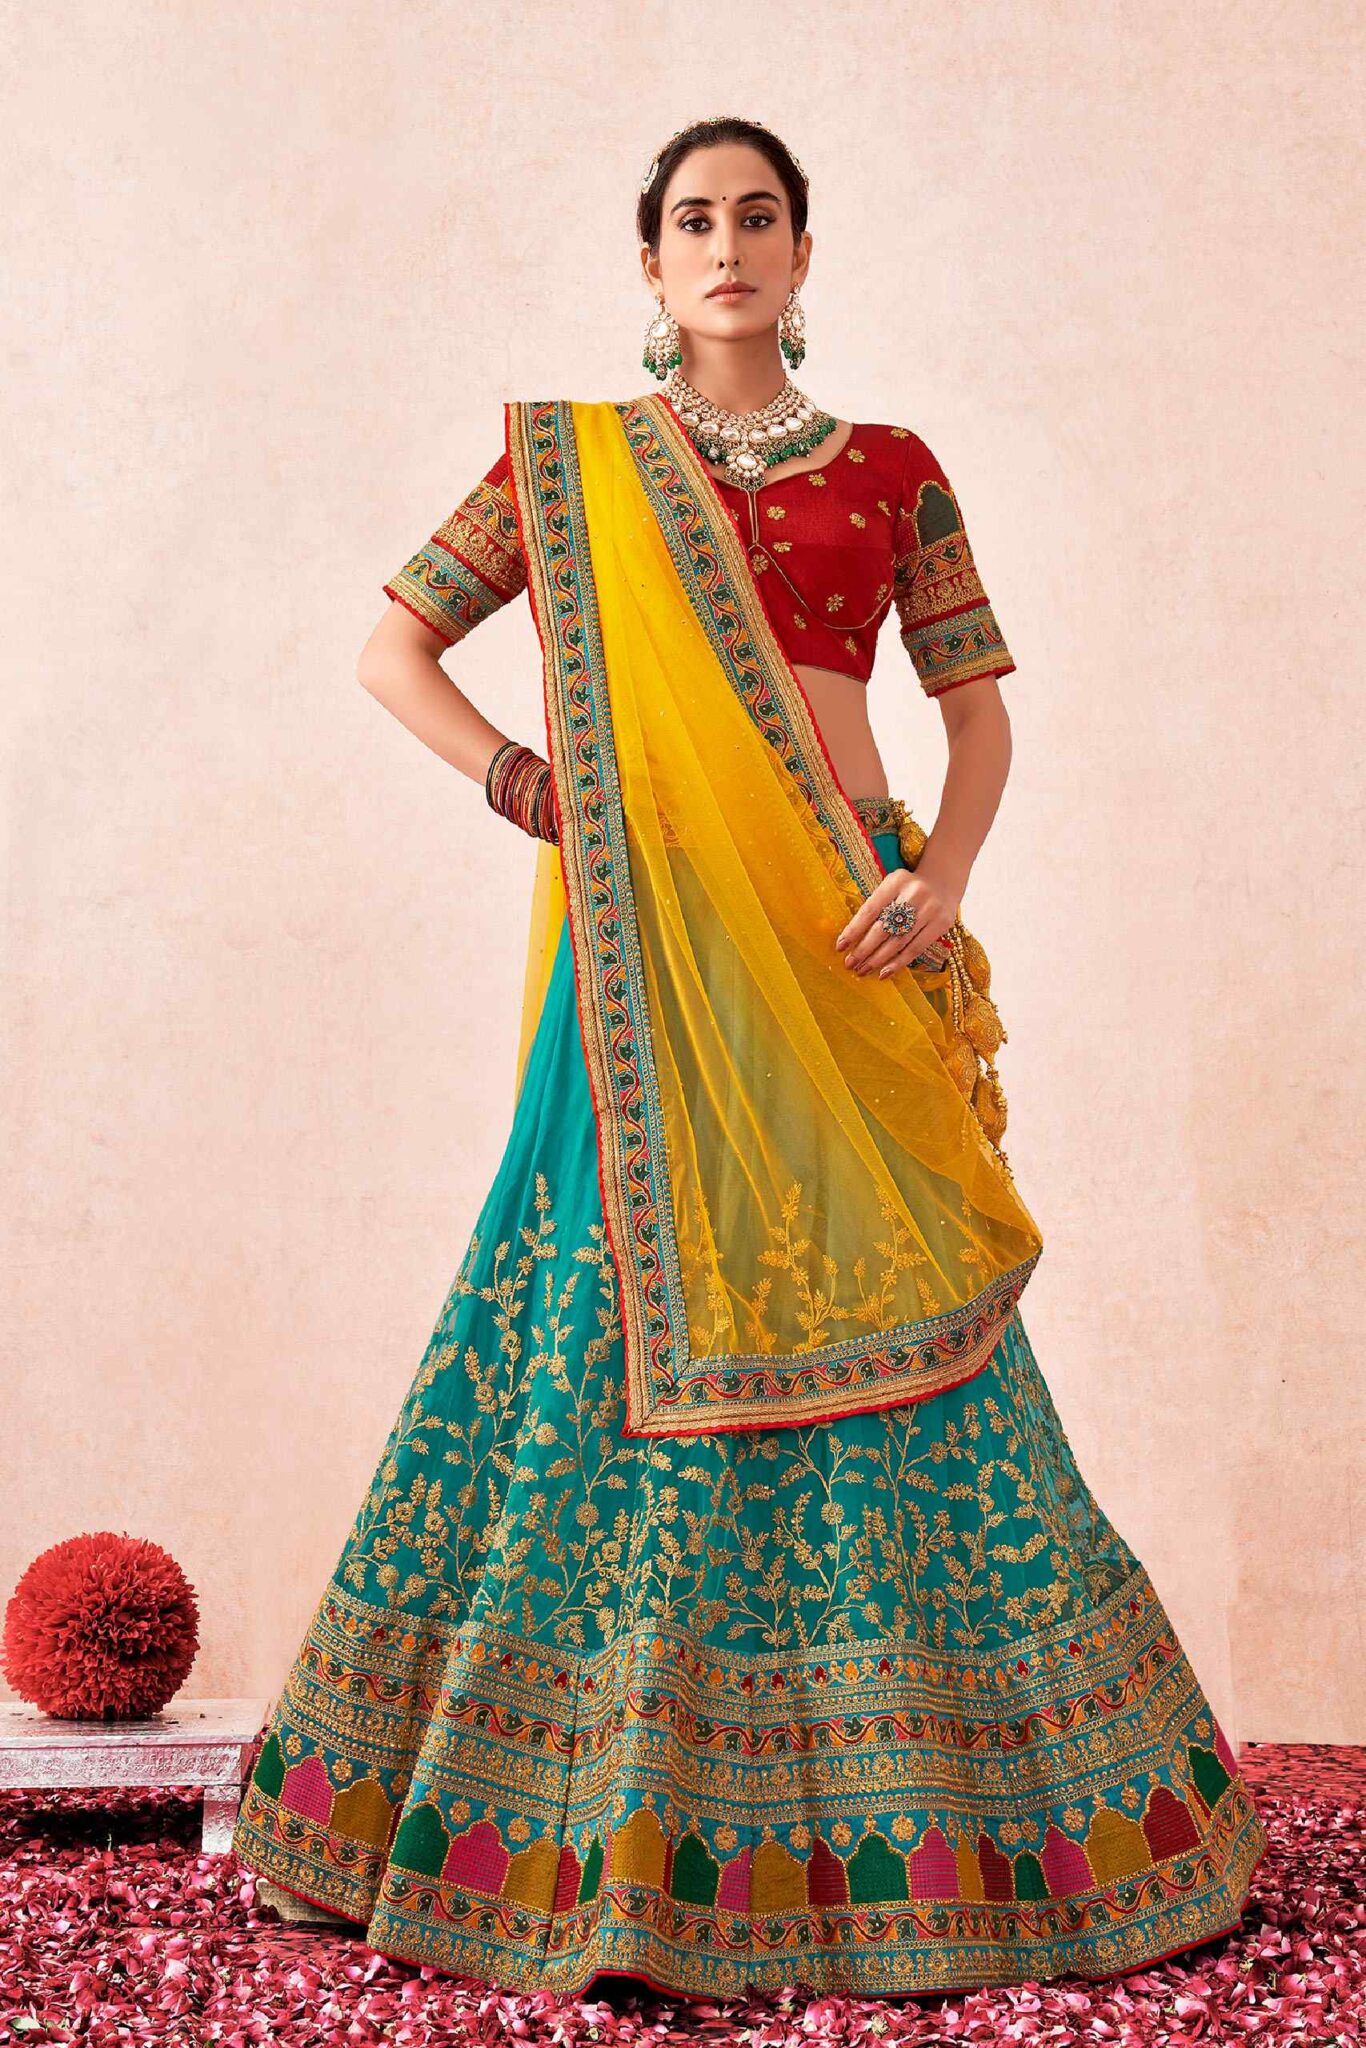 Hatkay - Pink And Yellow Embroidery Wedding Lehenga Choli Shop This Lehenga  Choli For $117 USD Search for Product Code :-ZC-7425 Shop -  https://hatkay.com/collections/lehengas #hatkay #indianwear #indianwedding  #traditionalwear #designer #lehenga ...